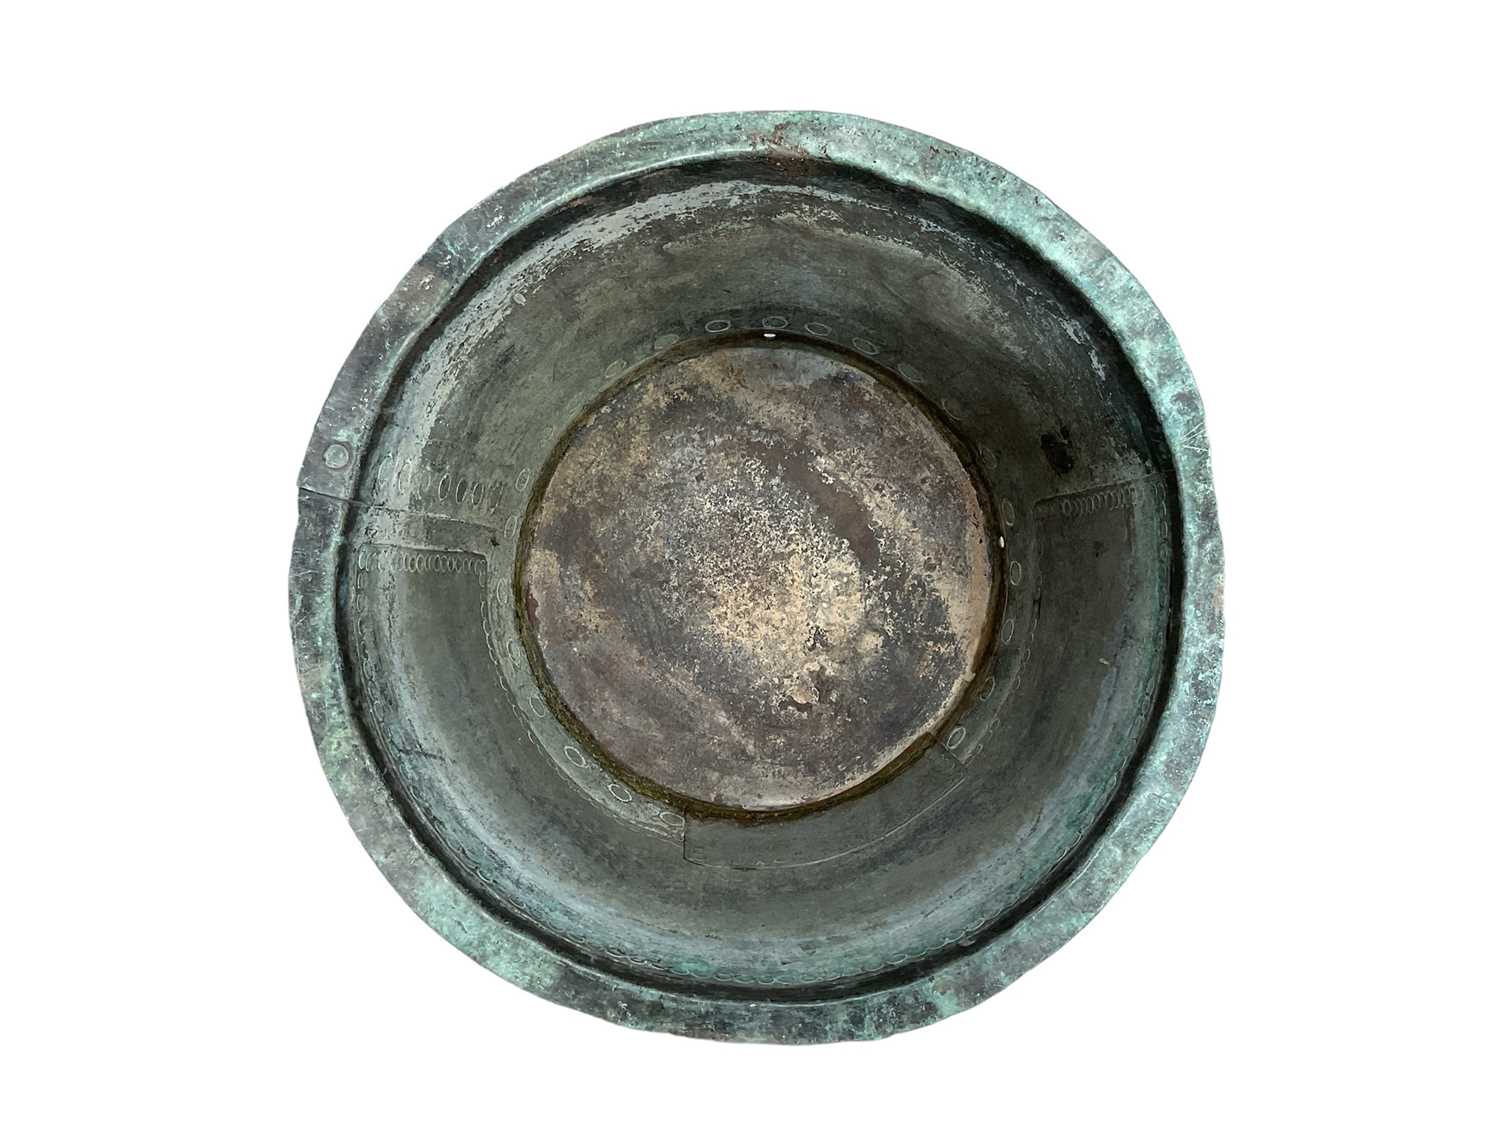 Riveted copper vessel - Image 2 of 2